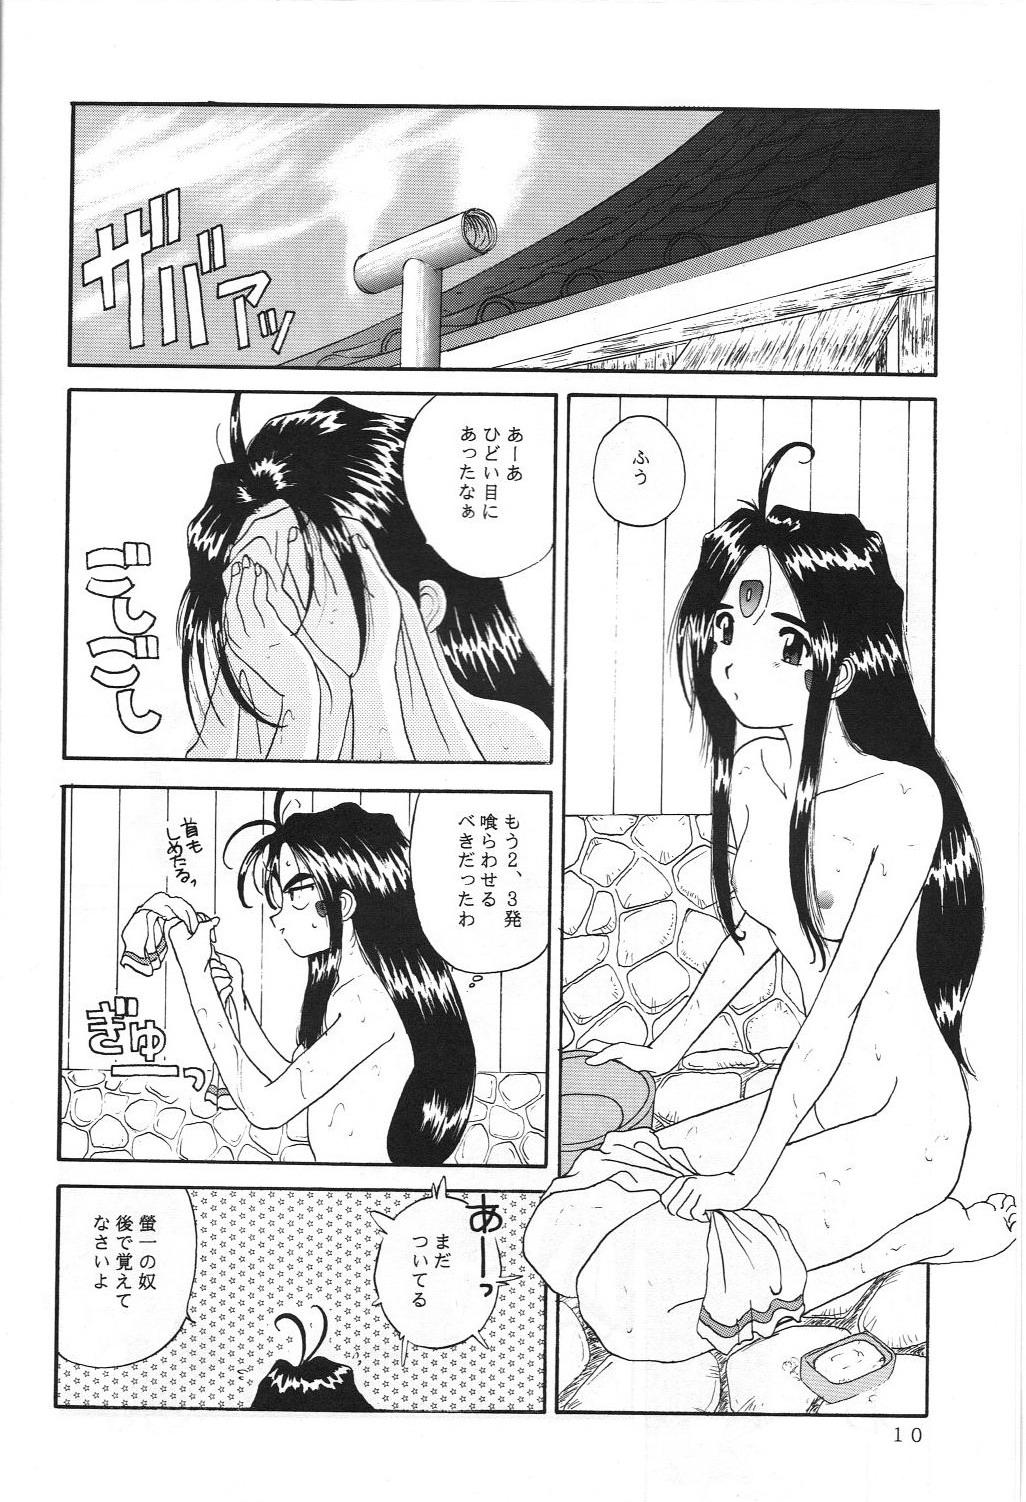 Instagram THE SECRET OF Chimatsuriya Vol. 5 - Ah my goddess Publico - Page 9